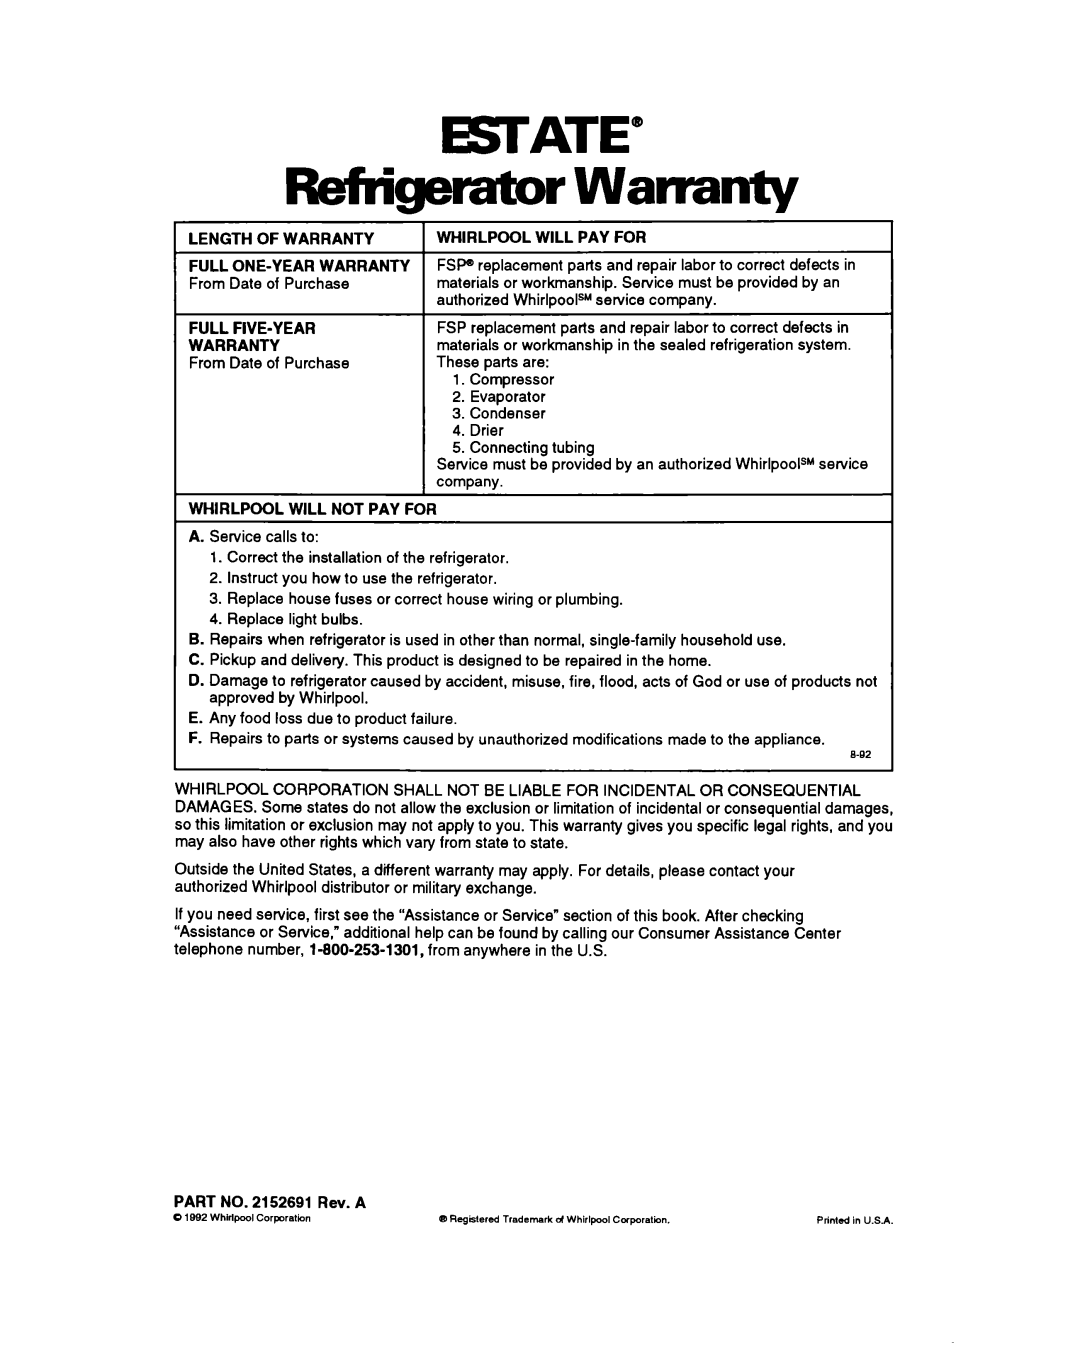 Whirlpool TS22BR warranty MATE” Miigemtor Warranty 